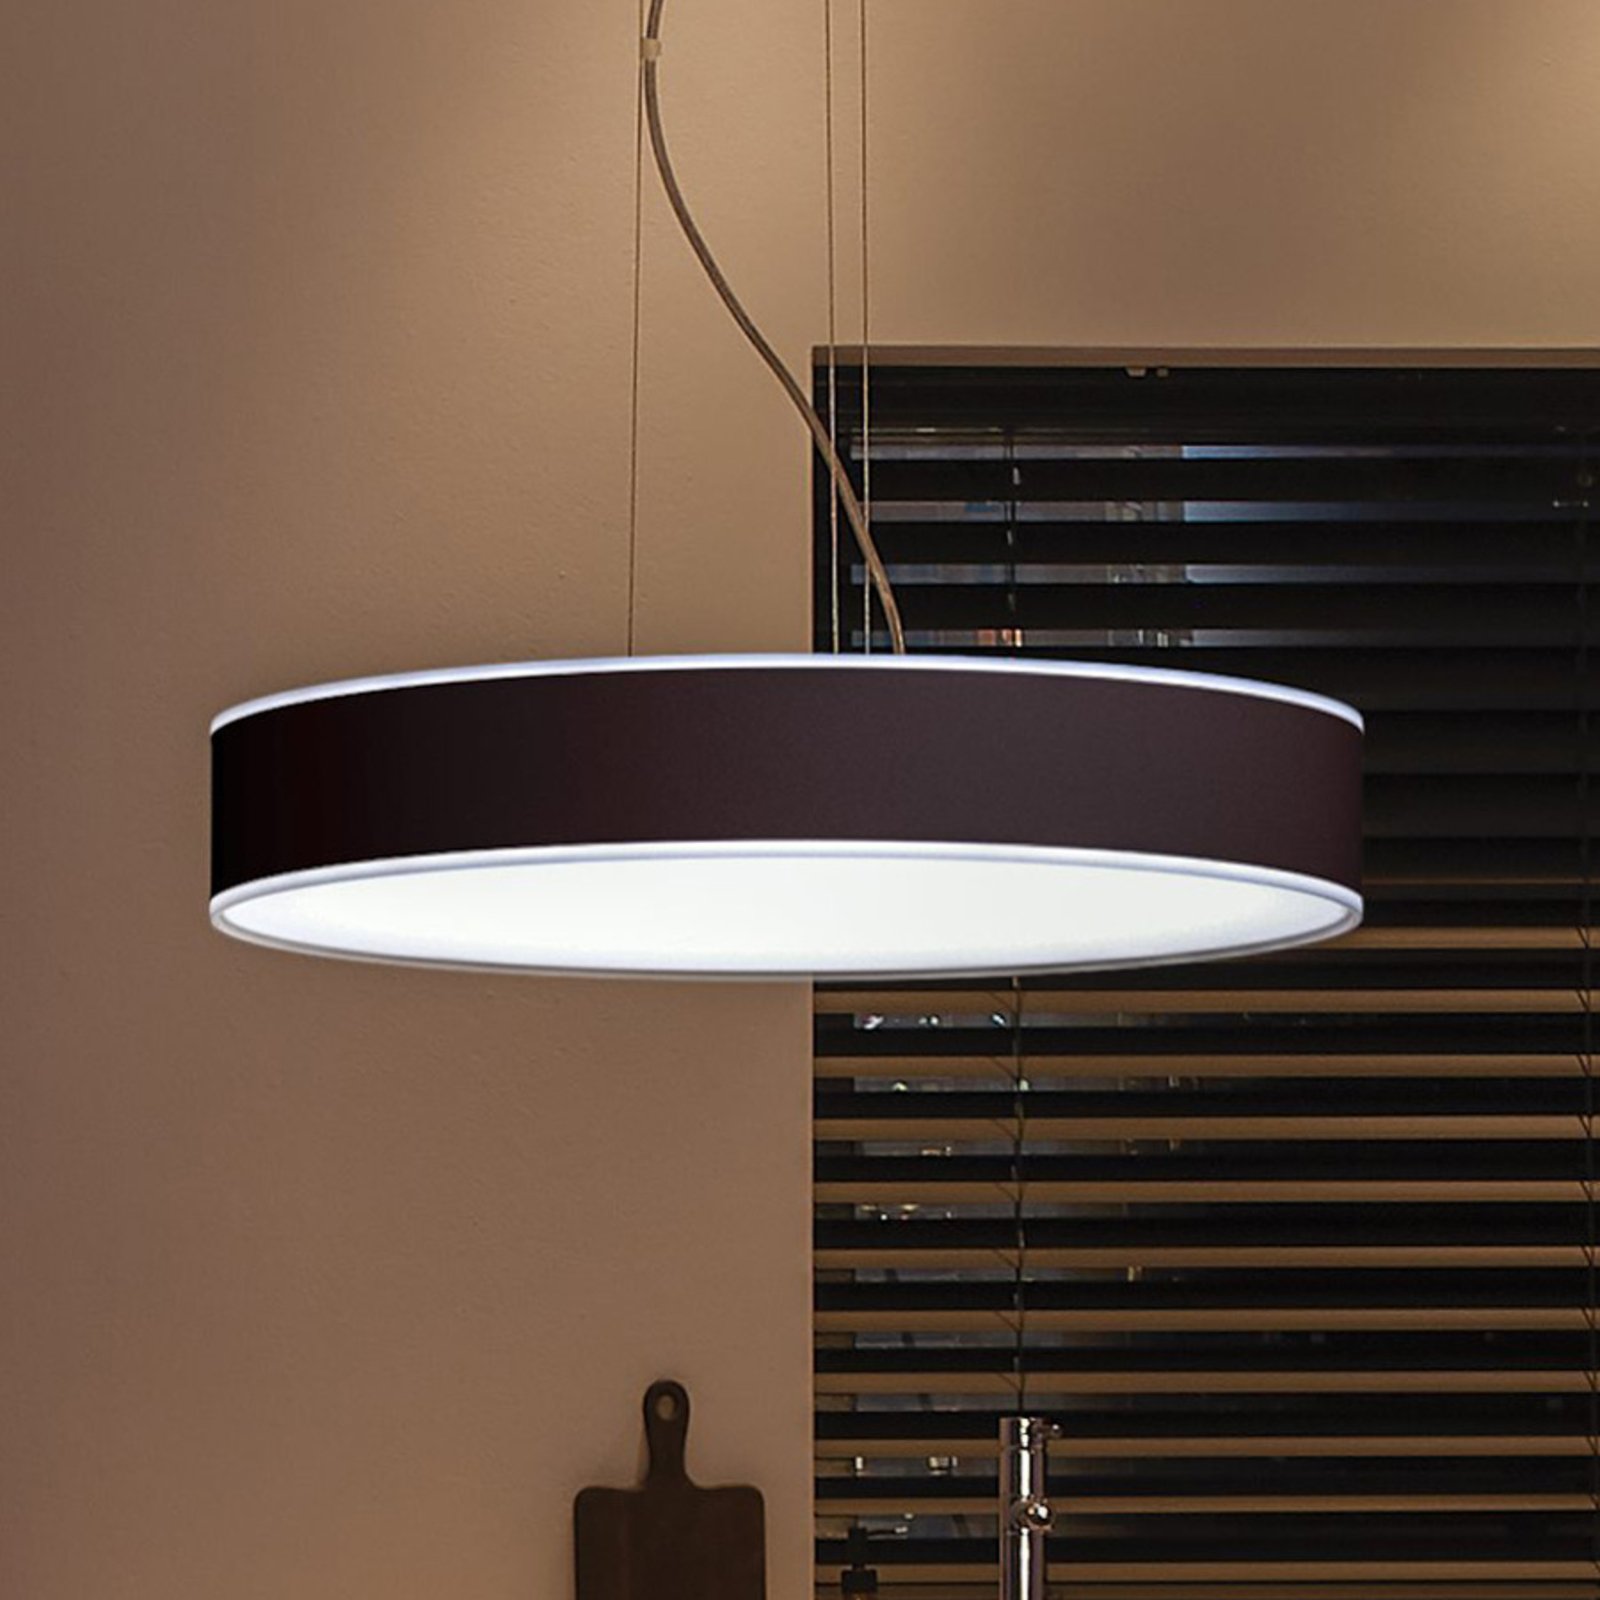 Philips Hue Enrave LED hanglamp, zwart